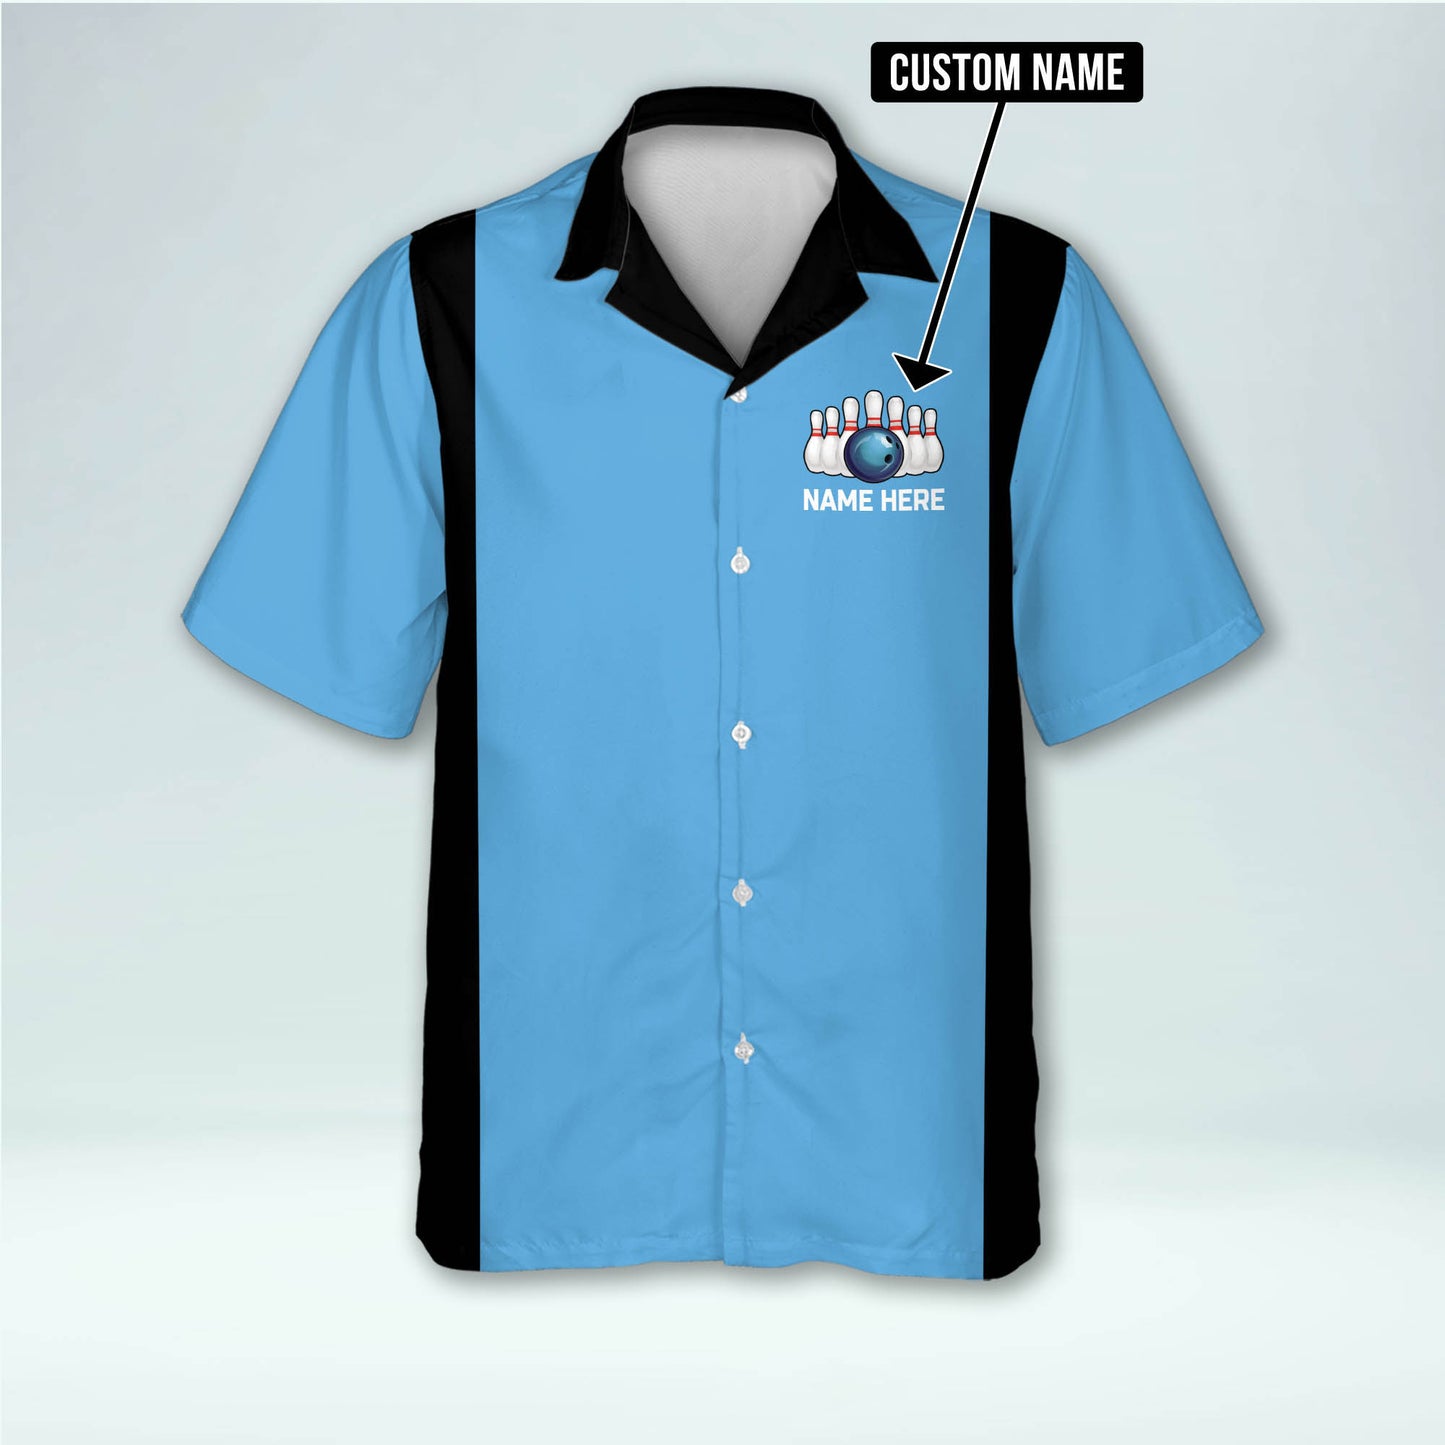 Custom We Can Train You Hawaiian Shirt HB0126